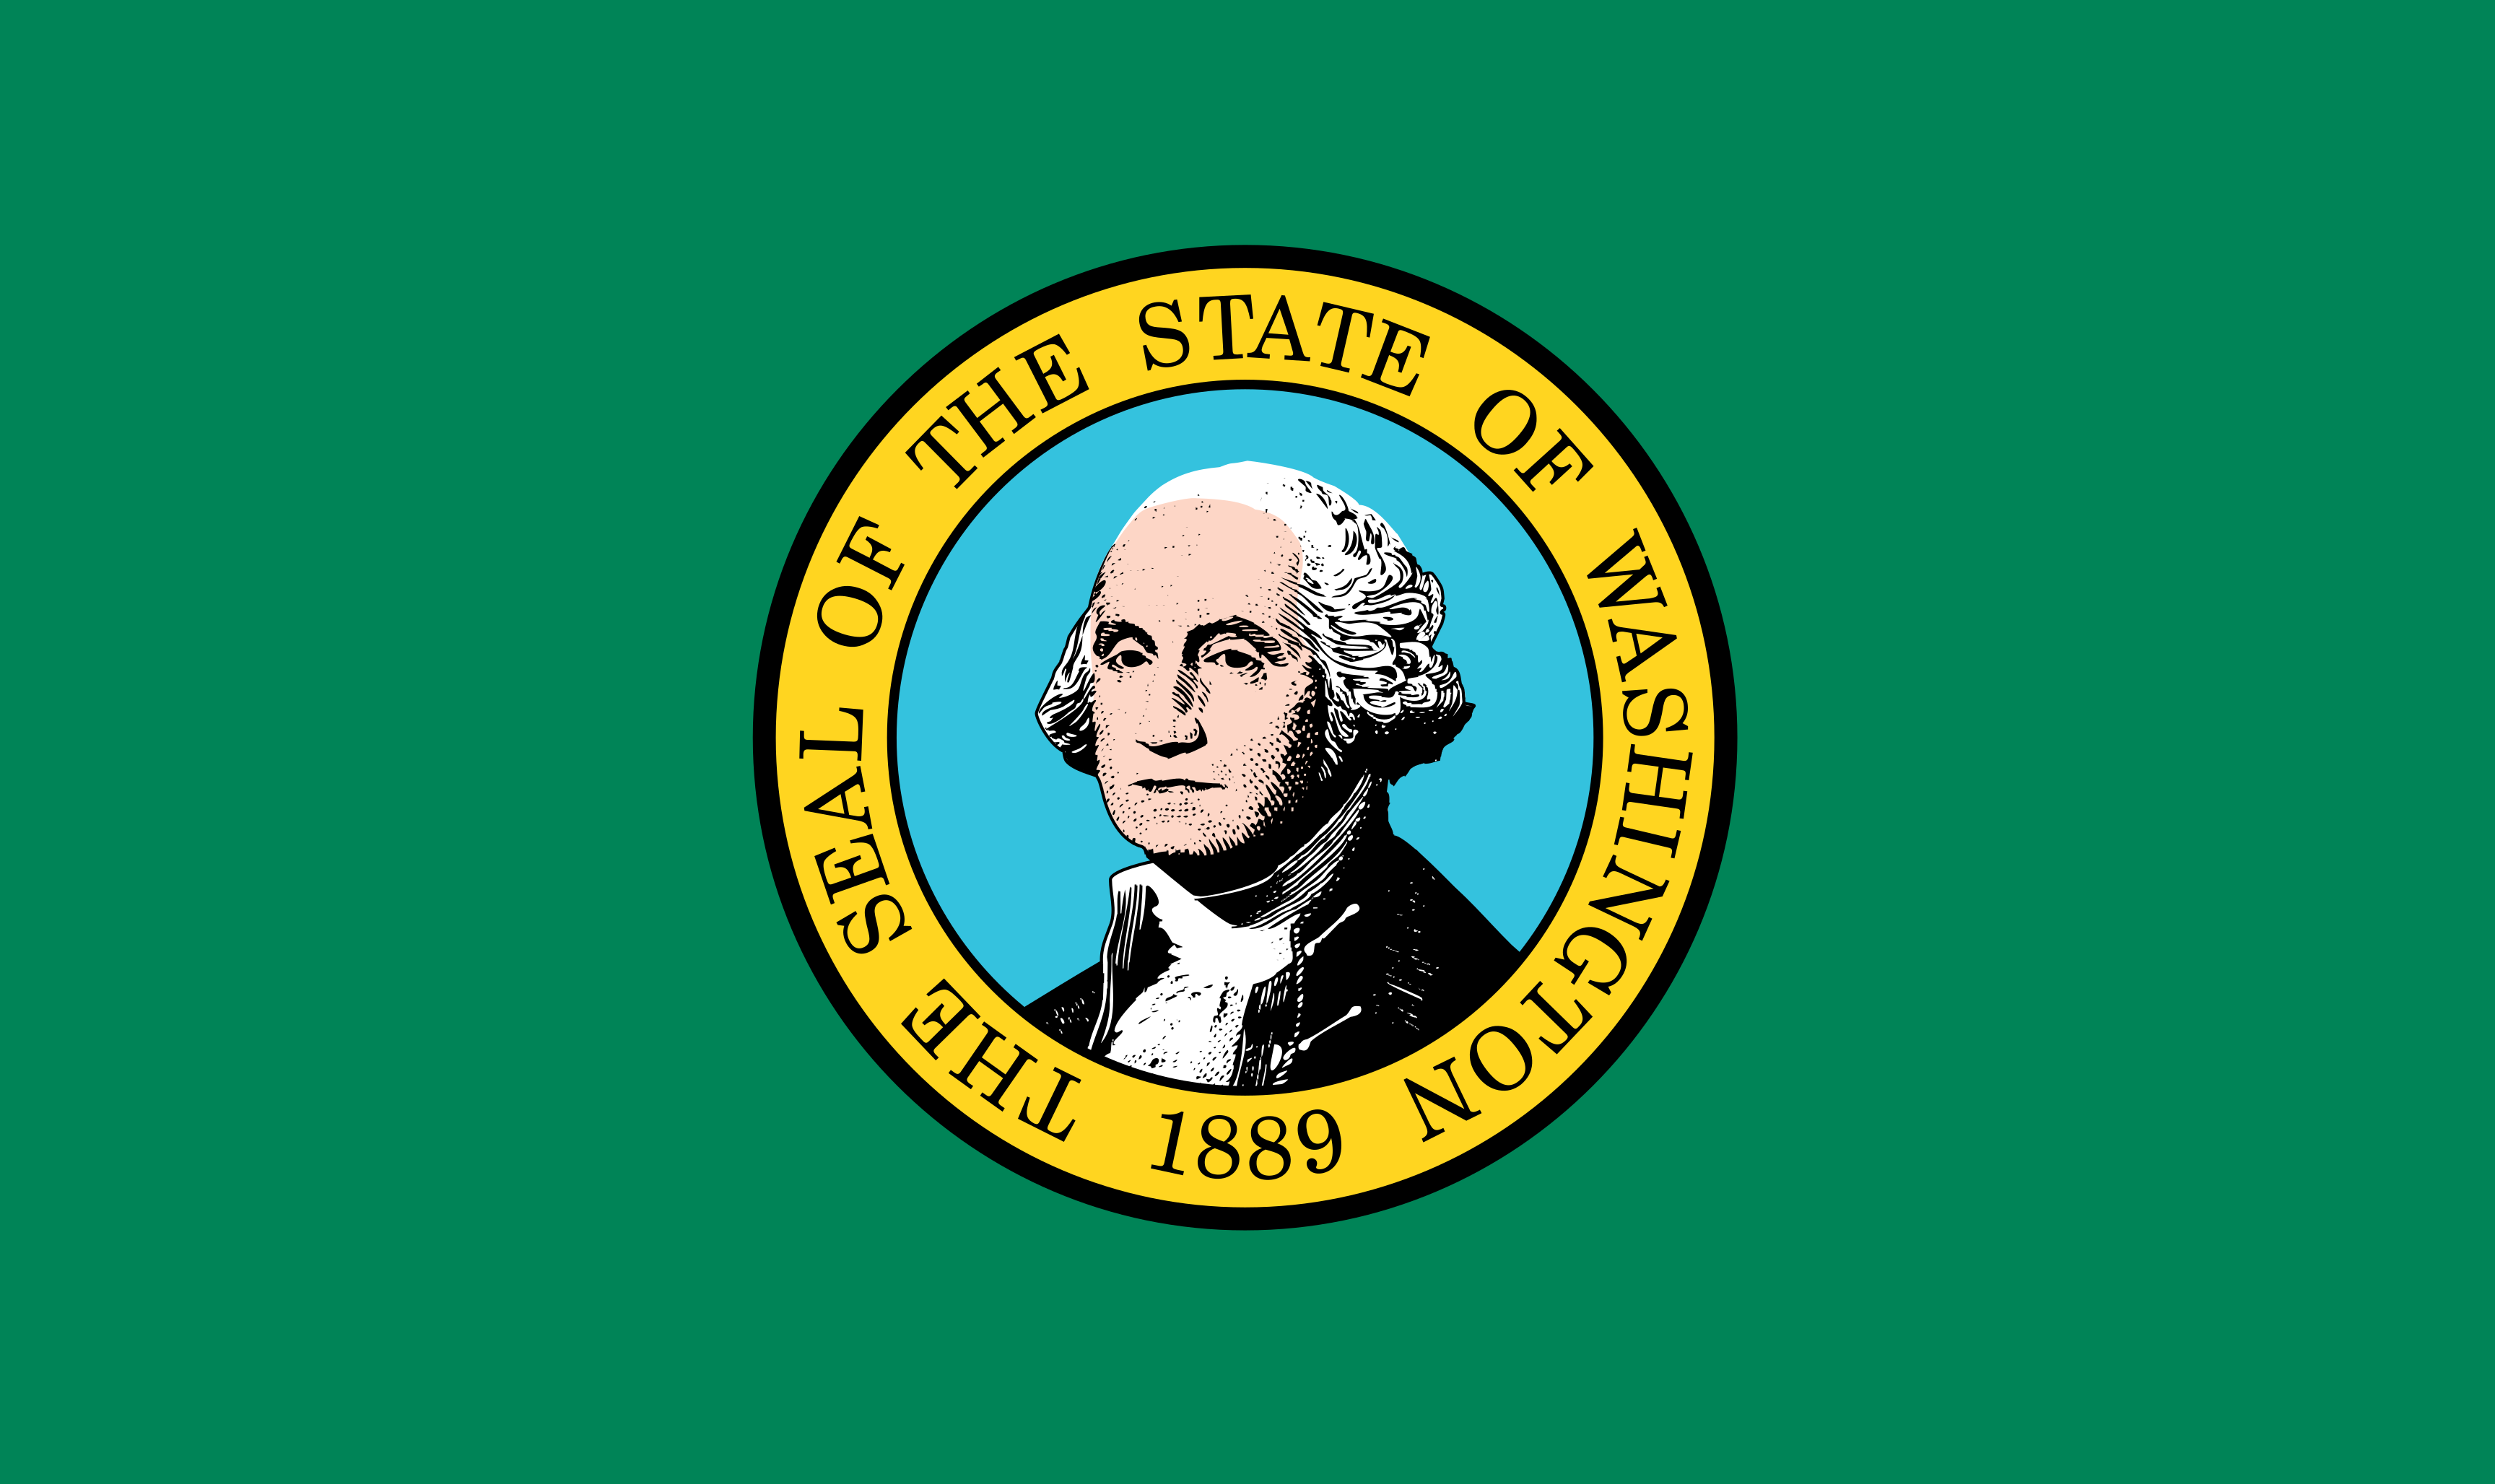 Free Washington Flag Images: AI, EPS, GIF, JPG, PDF, PNG, SVG and more!